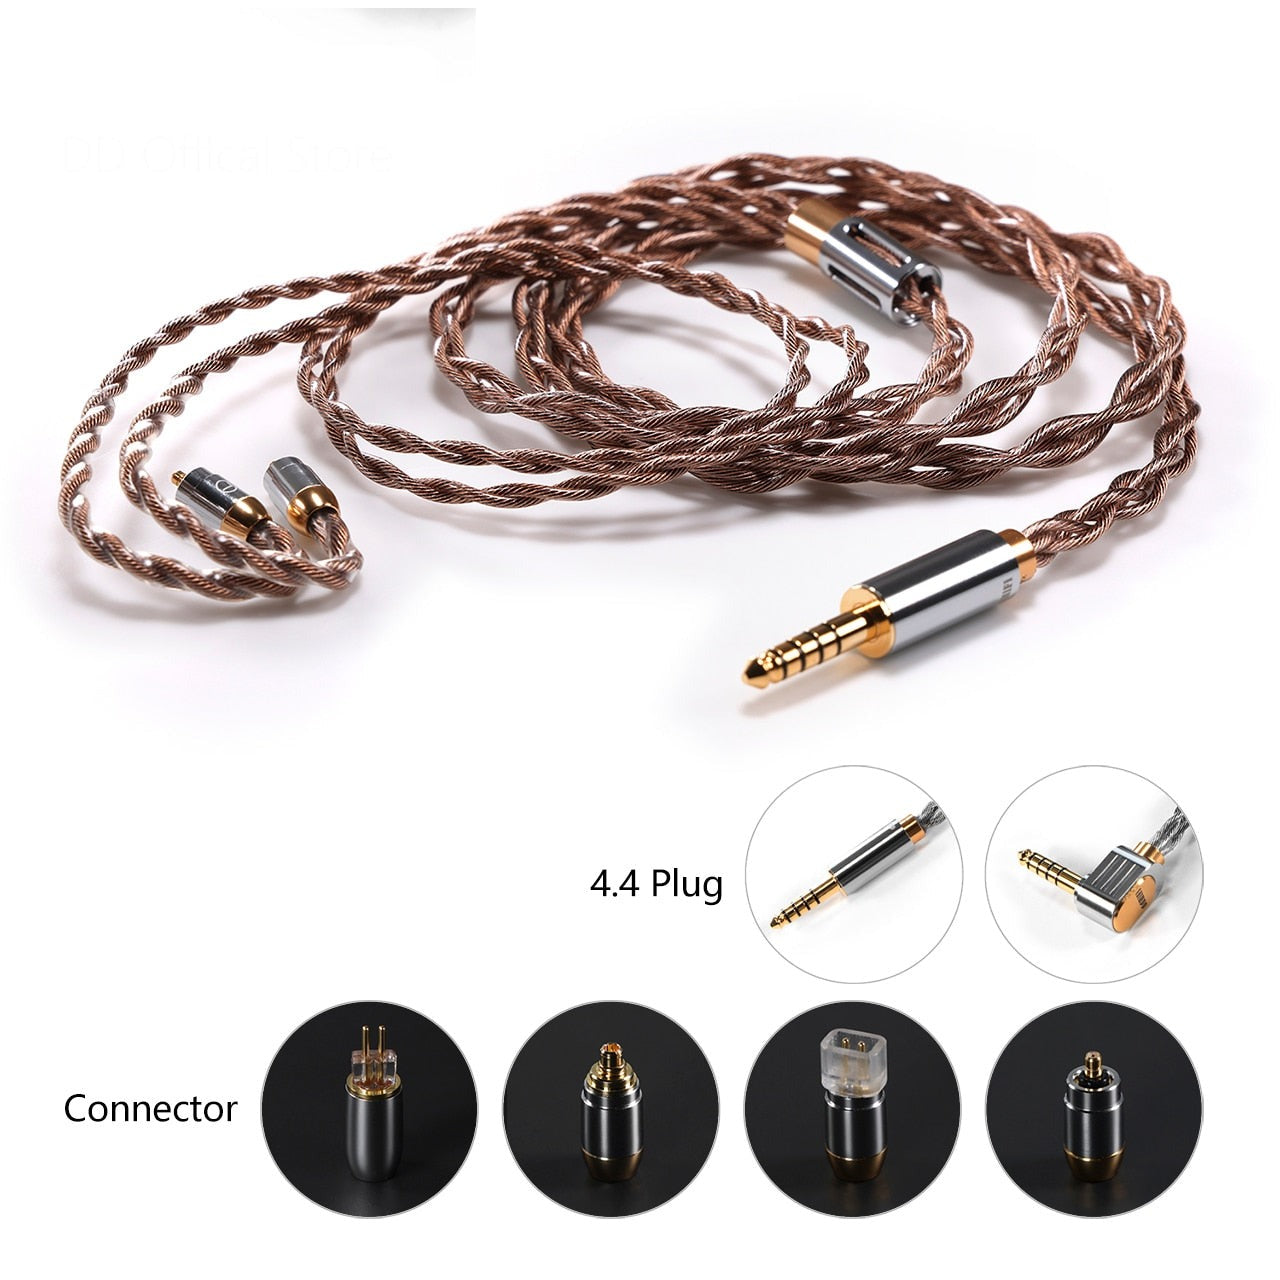 ddHiFi BC130B (Air Nyx) OCC Earphone Upgrade Cable - The HiFi Cat